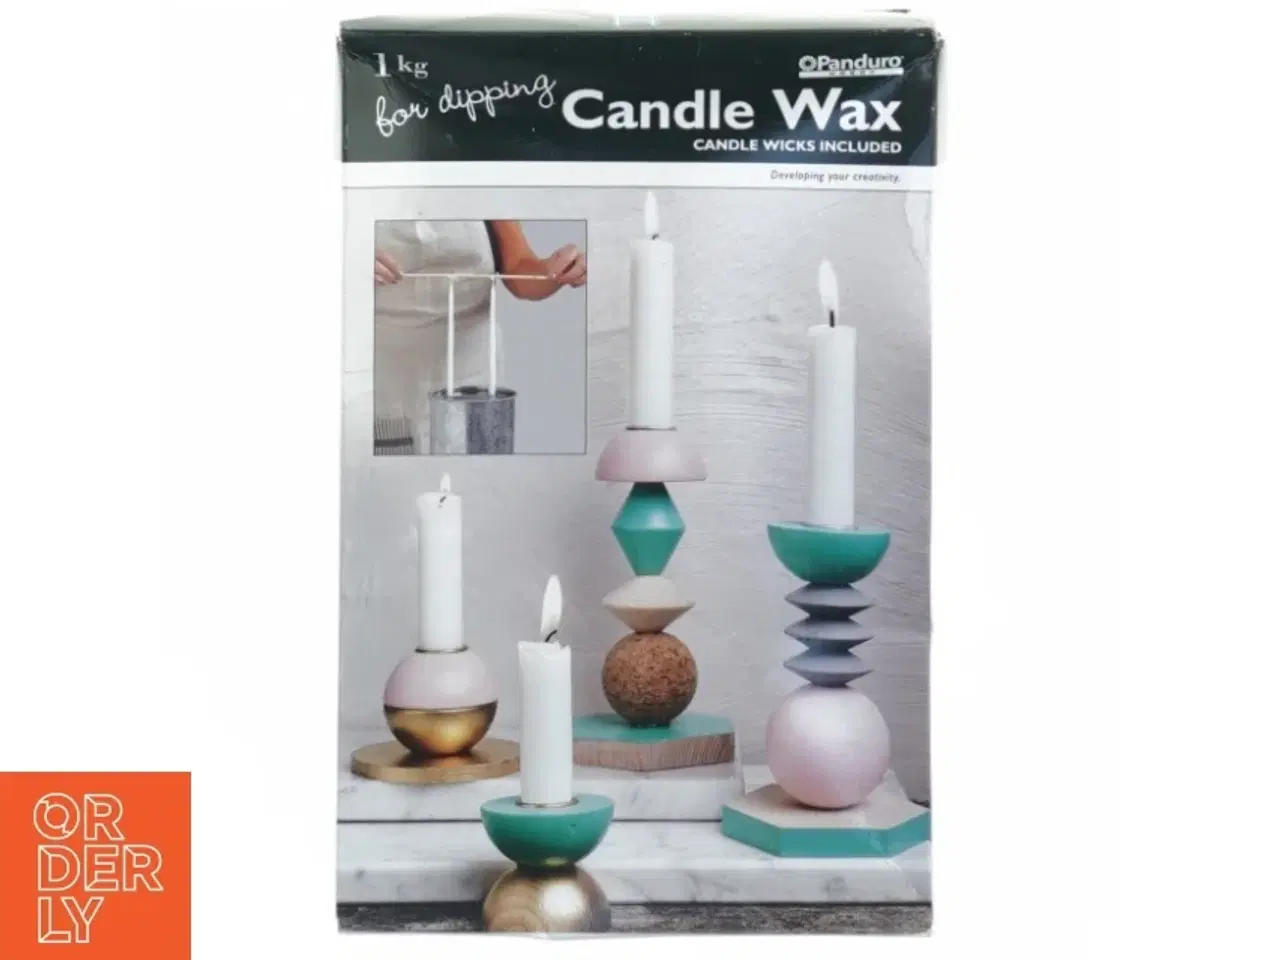 Billede 1 - Candle wax fra Panduro Hobby (str. Et kilo)